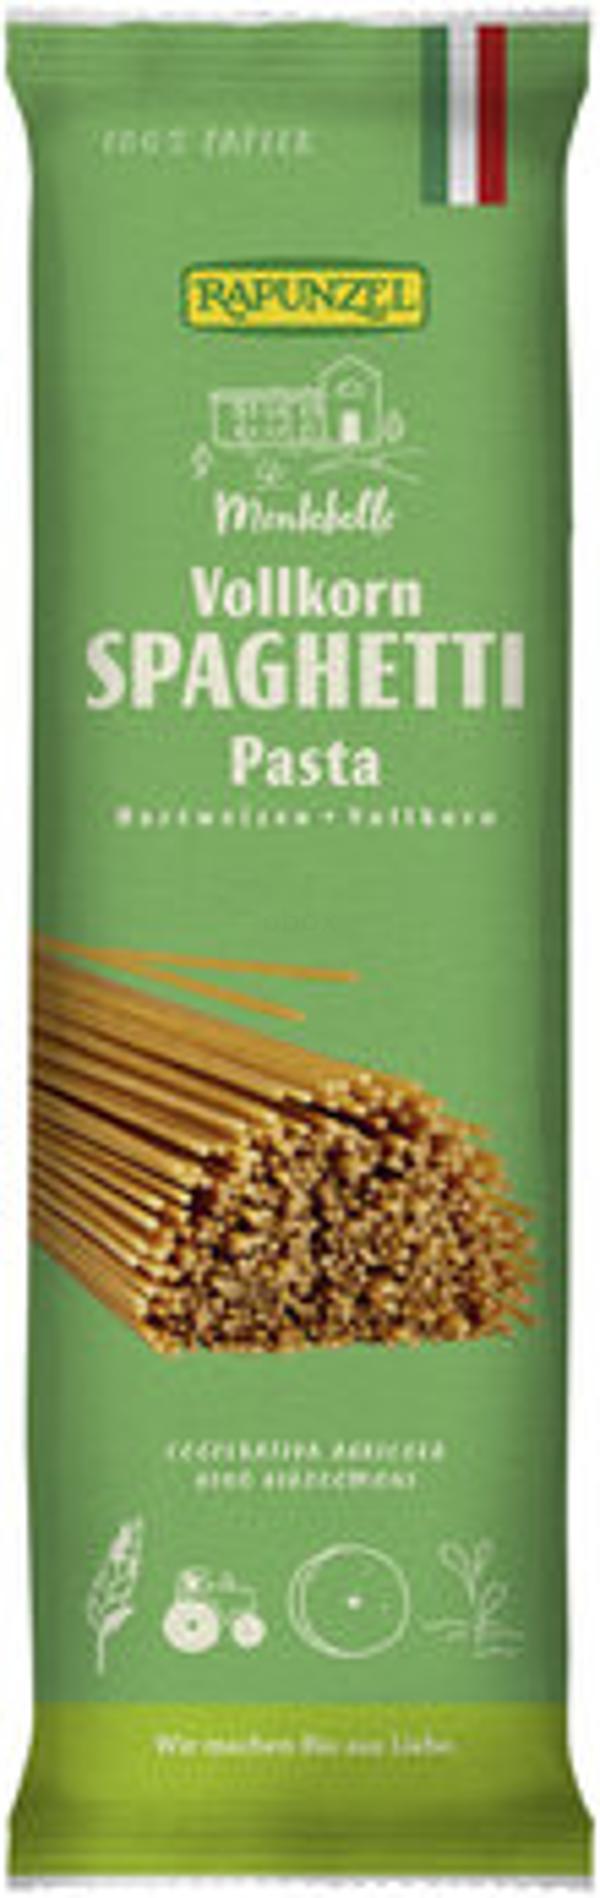 Produktfoto zu Spaghetti, Vollkorn